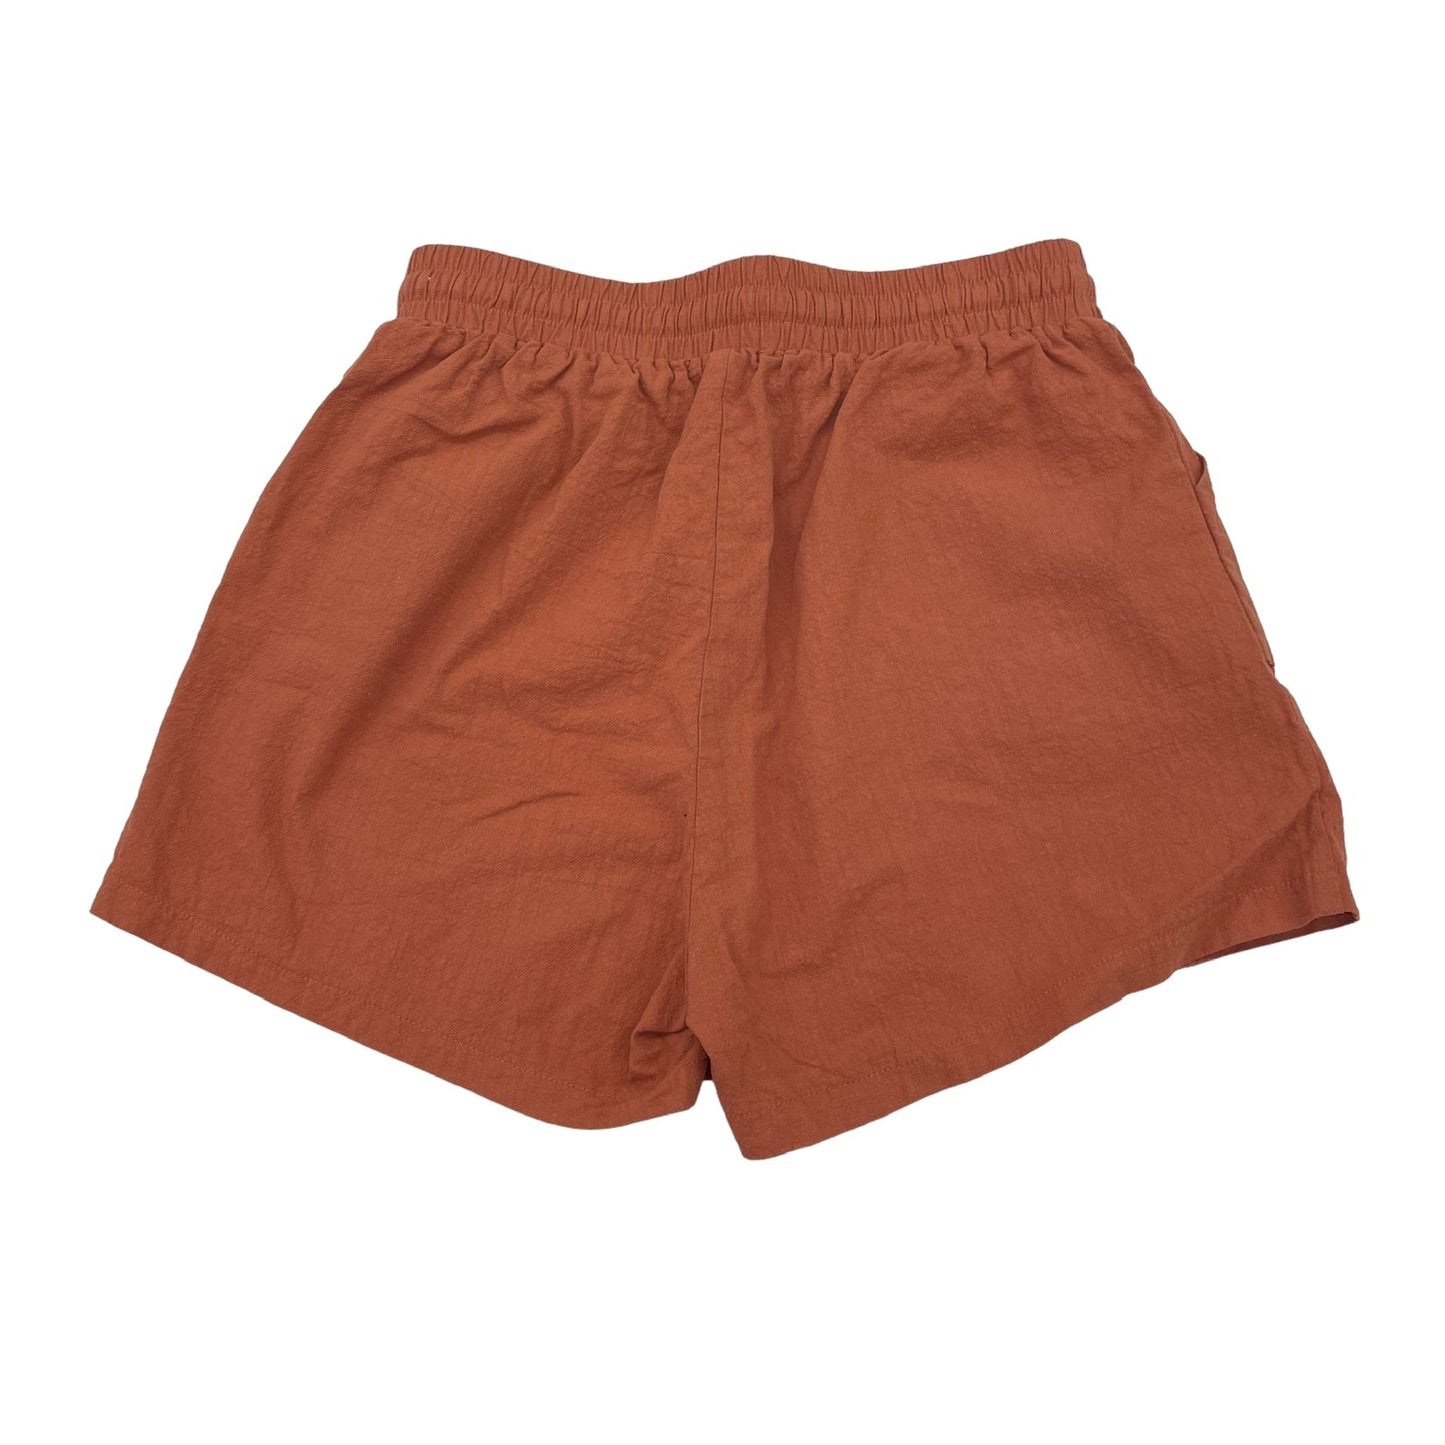 Orange Shorts Clothes Mentor, Size M